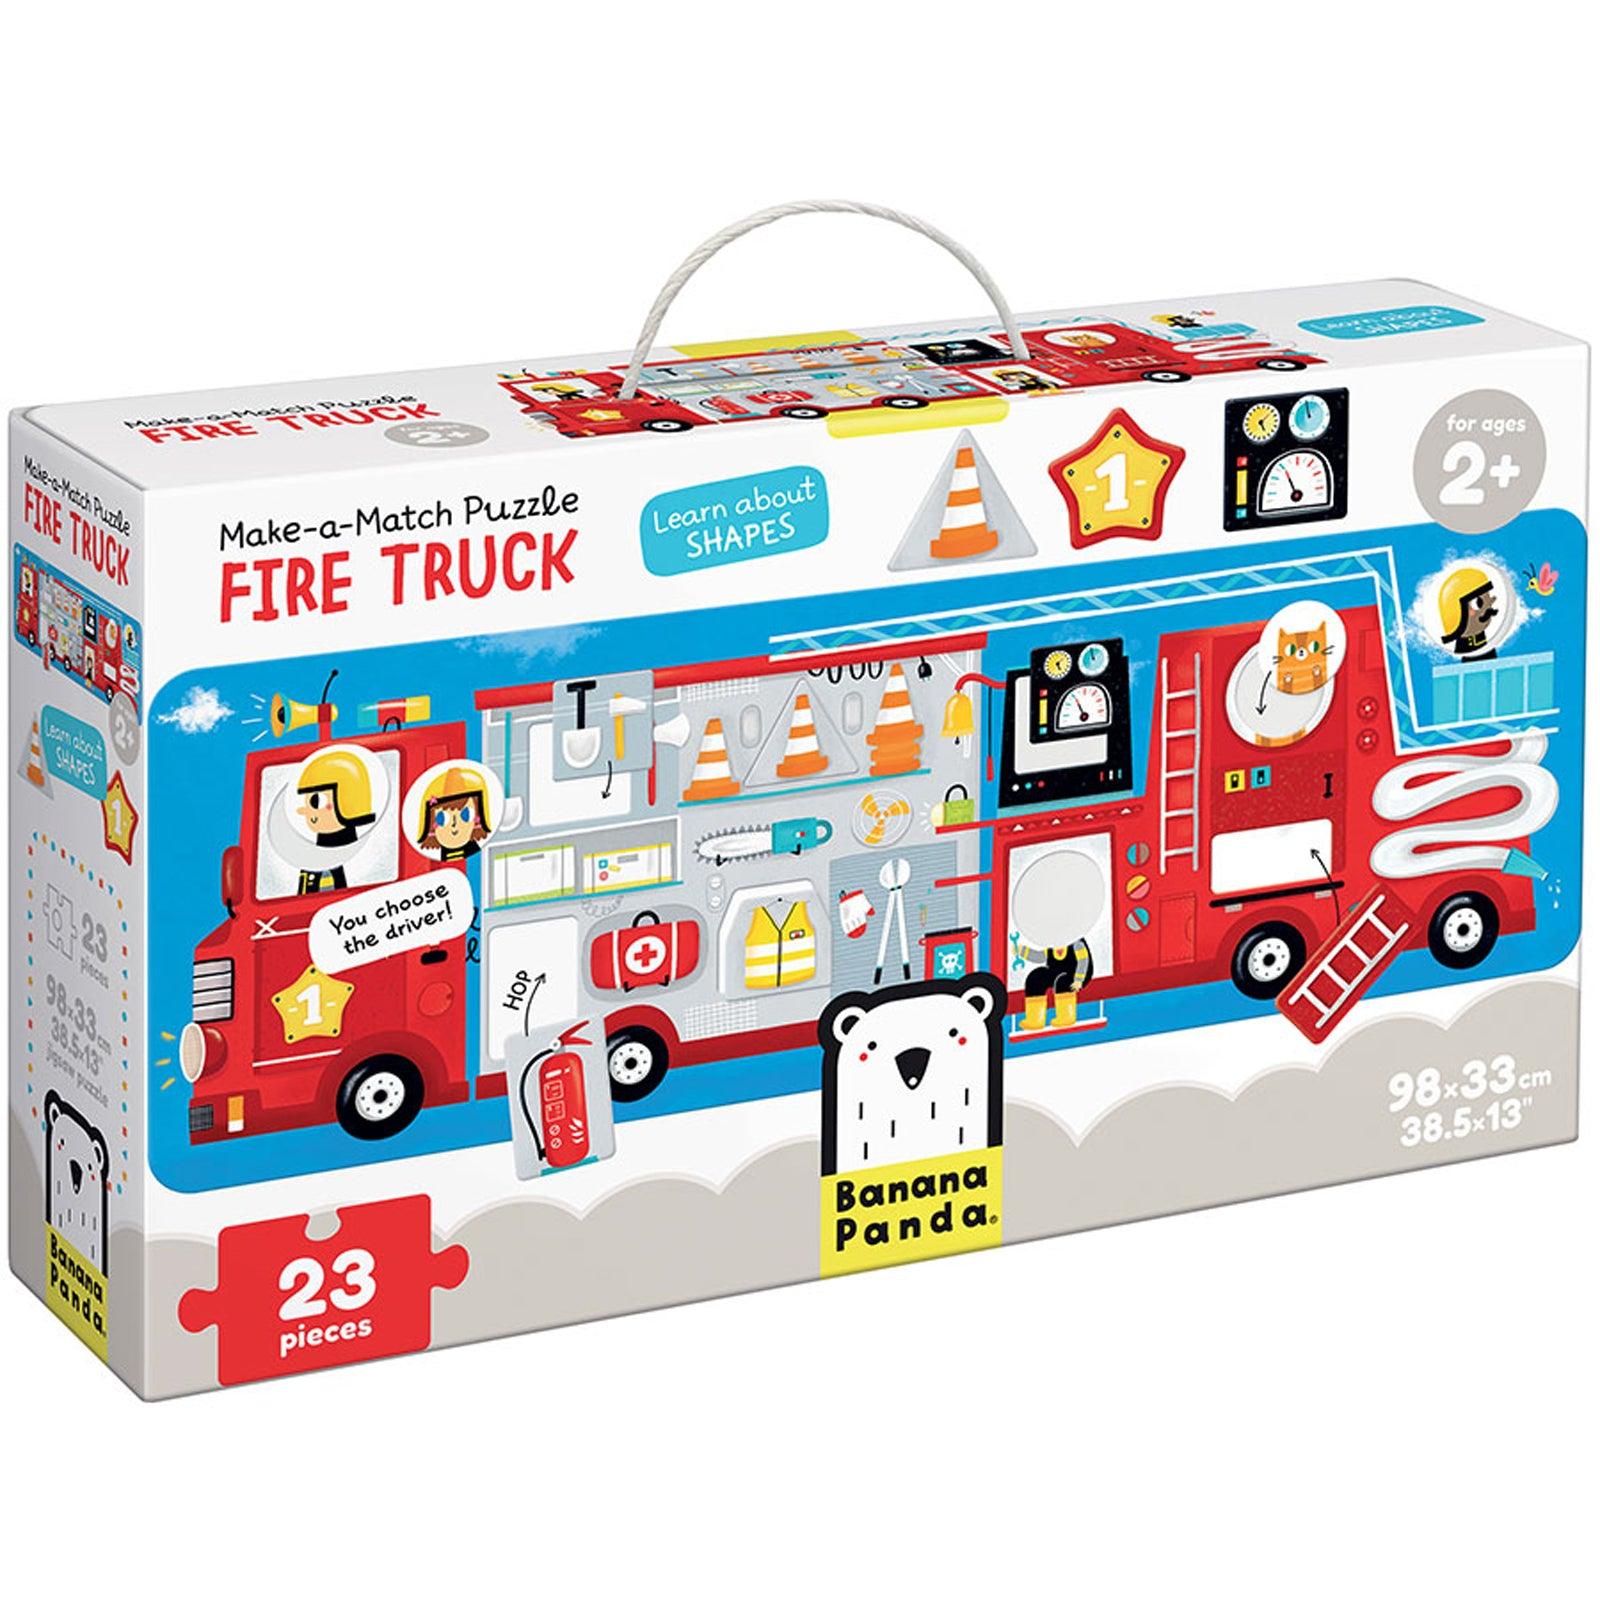 Make-a-Match Puzzle Fire Truck - Loomini